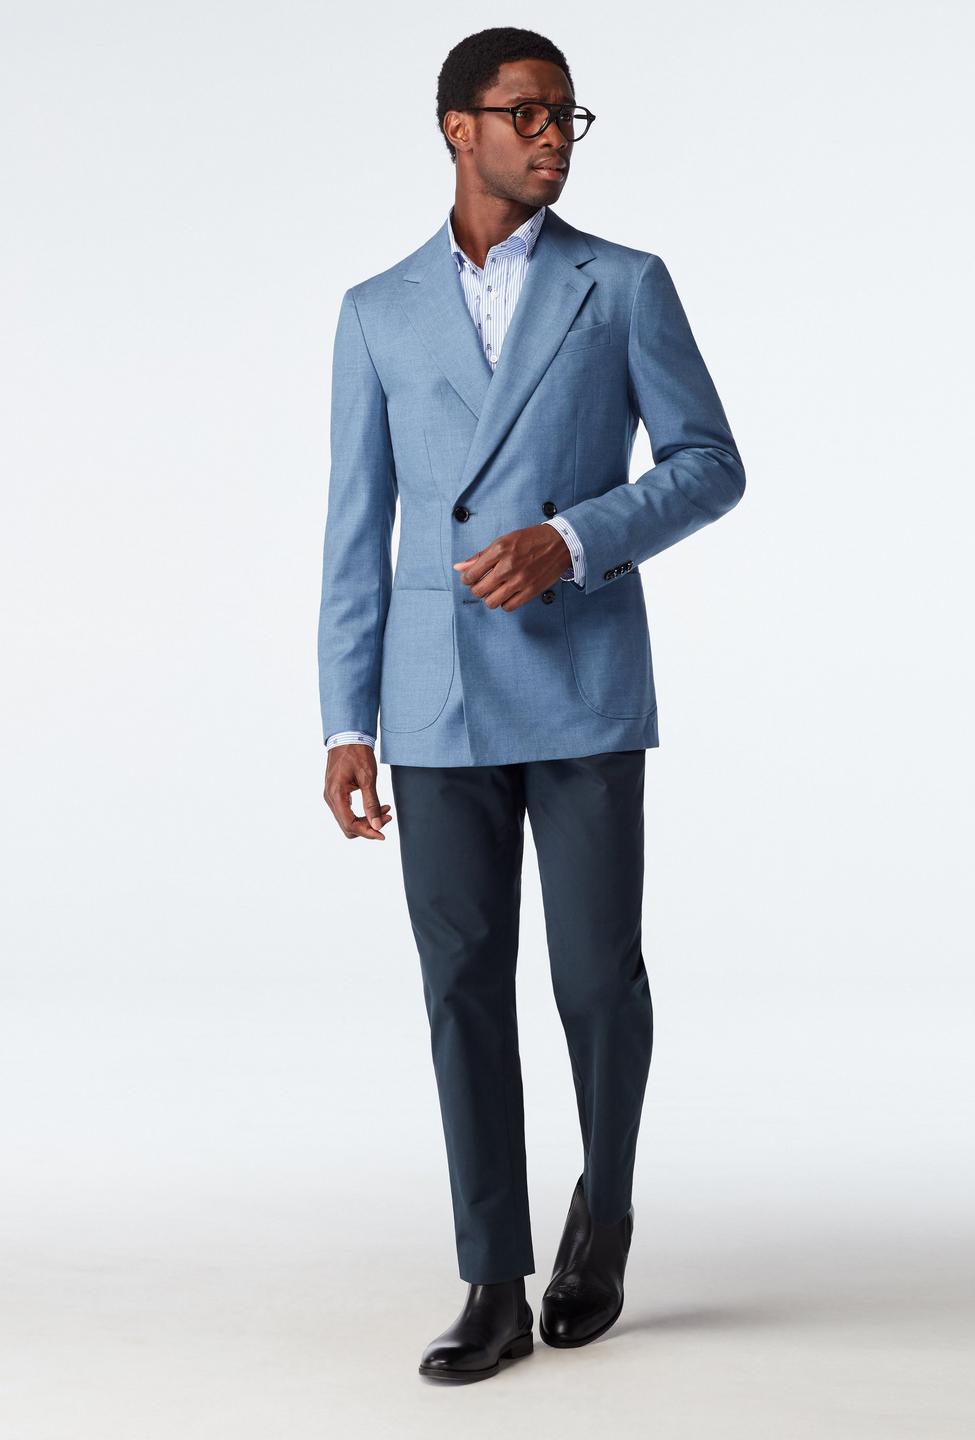 Blue blazer - Hayward Solid Design from Luxury Indochino Collection